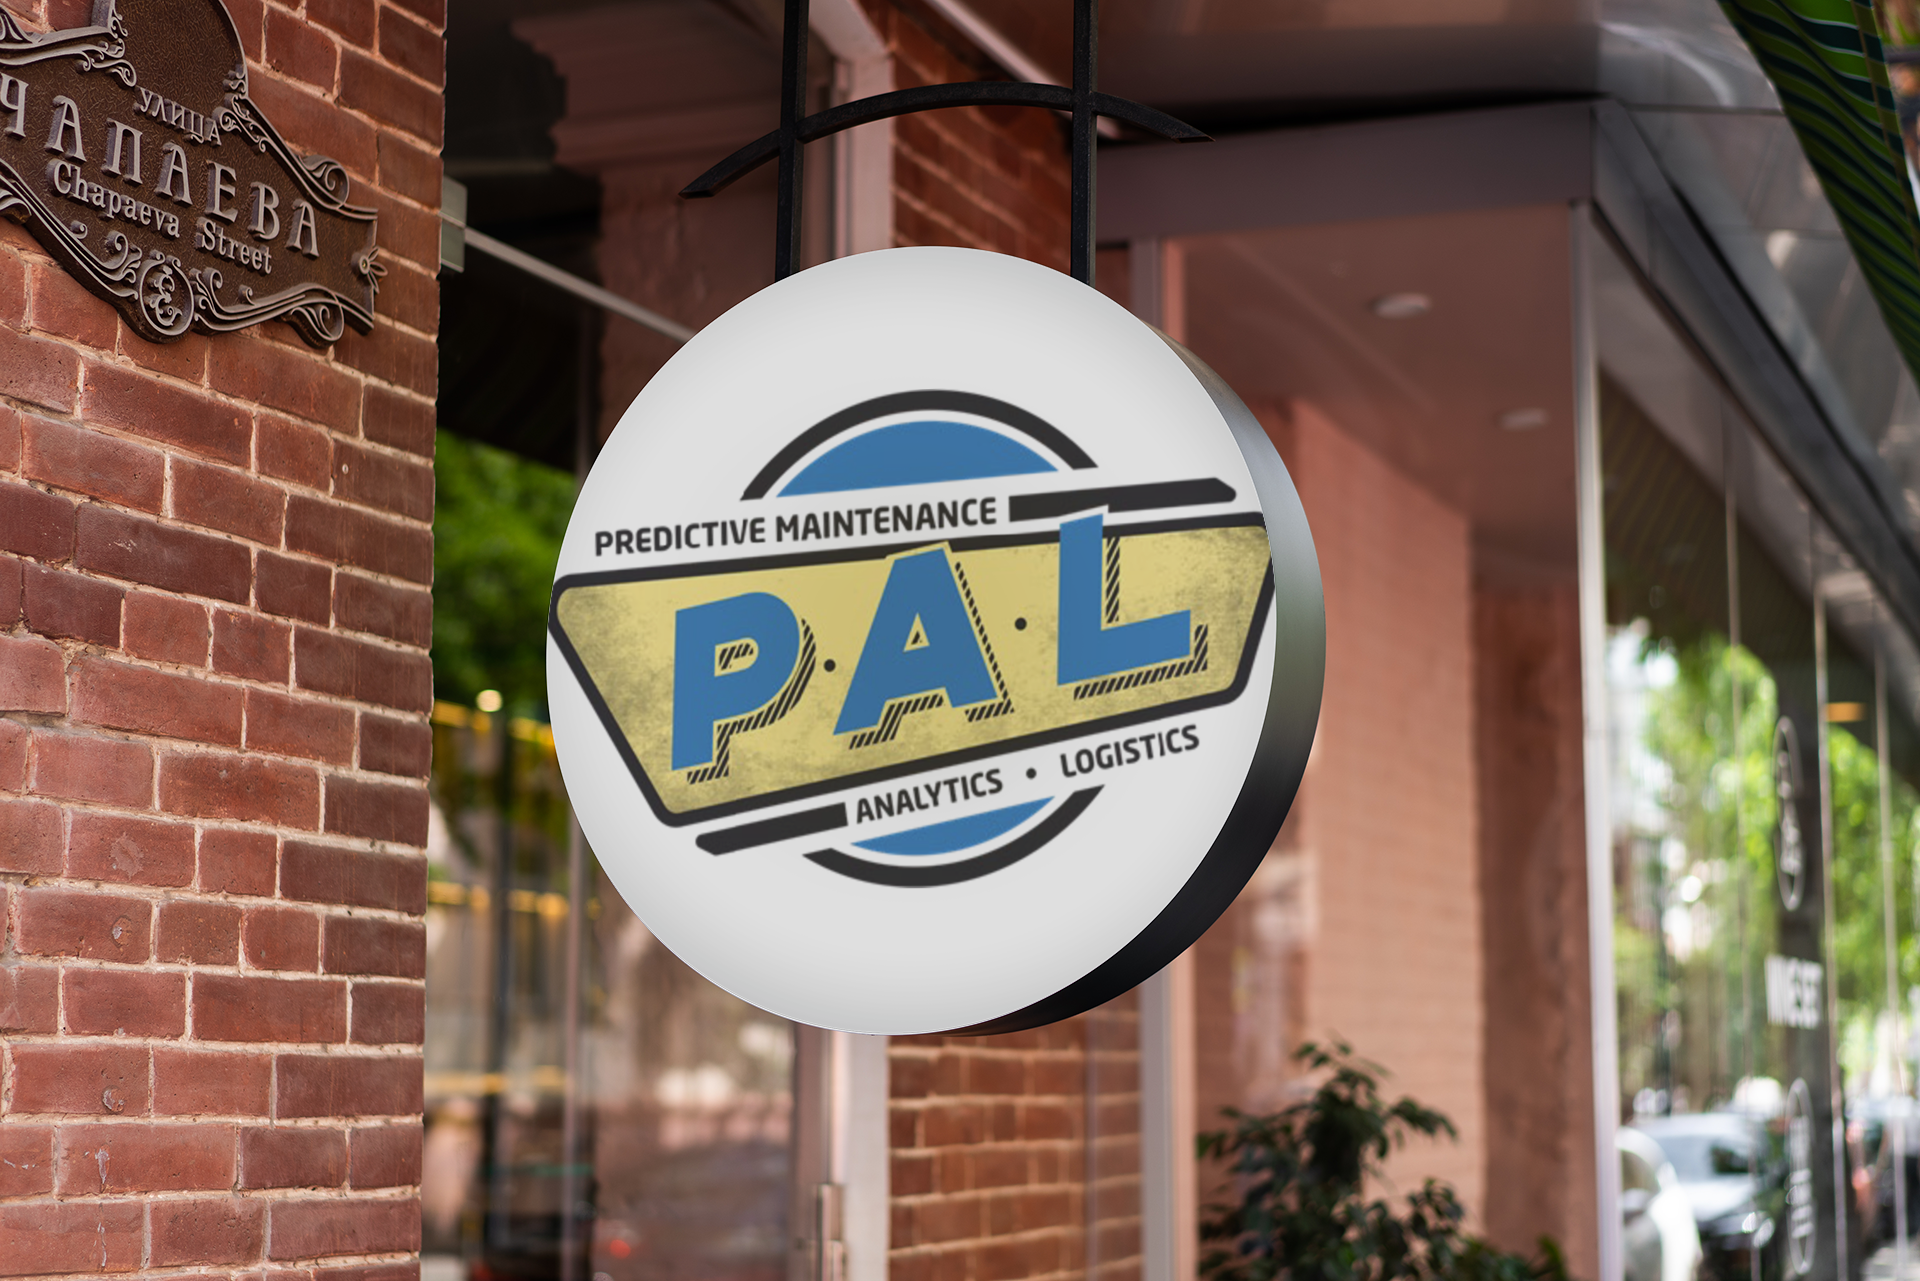 Predictive Maintenance Analytic Logistics P.A.L. logo on a sign.